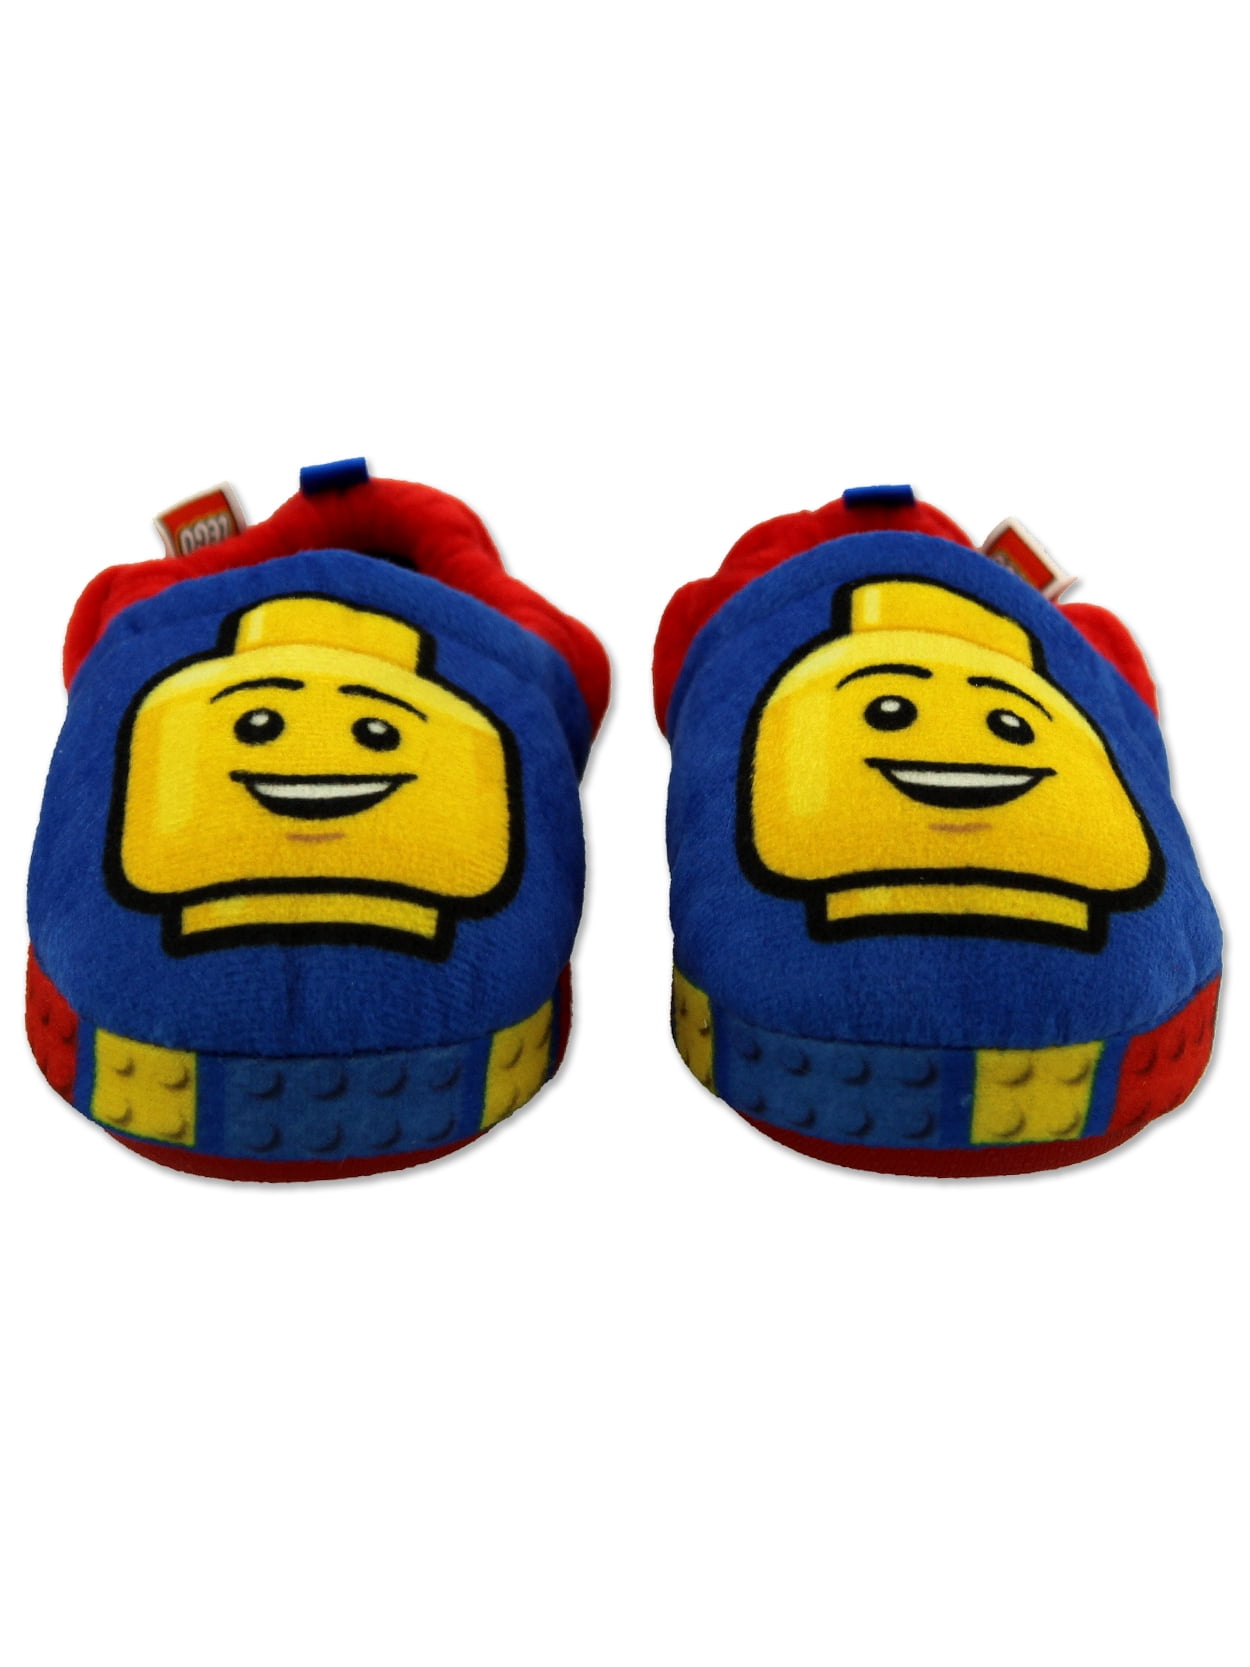 boys lego slippers